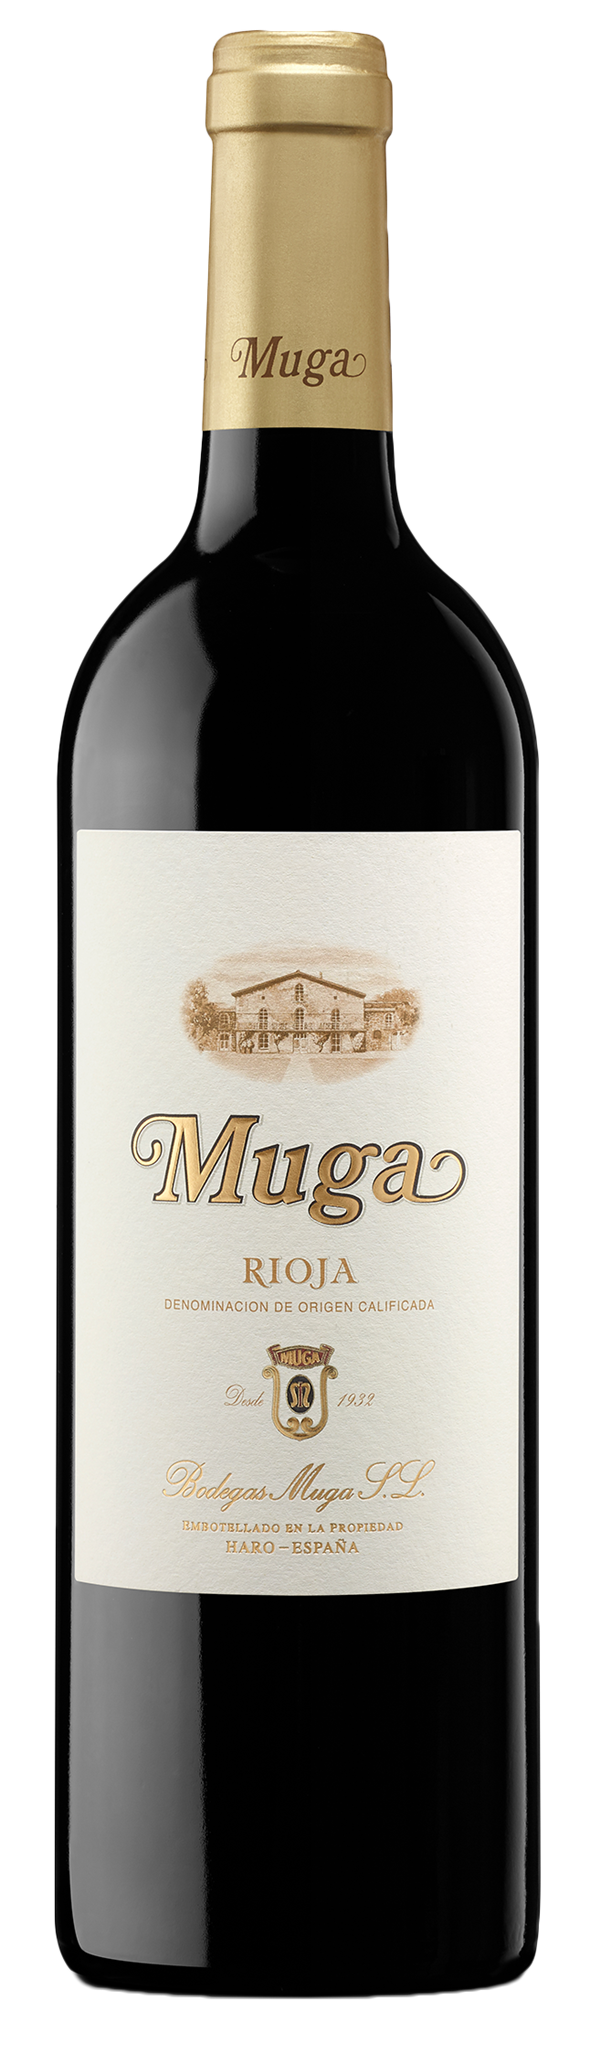 Muga Reserva 2019, Rioja